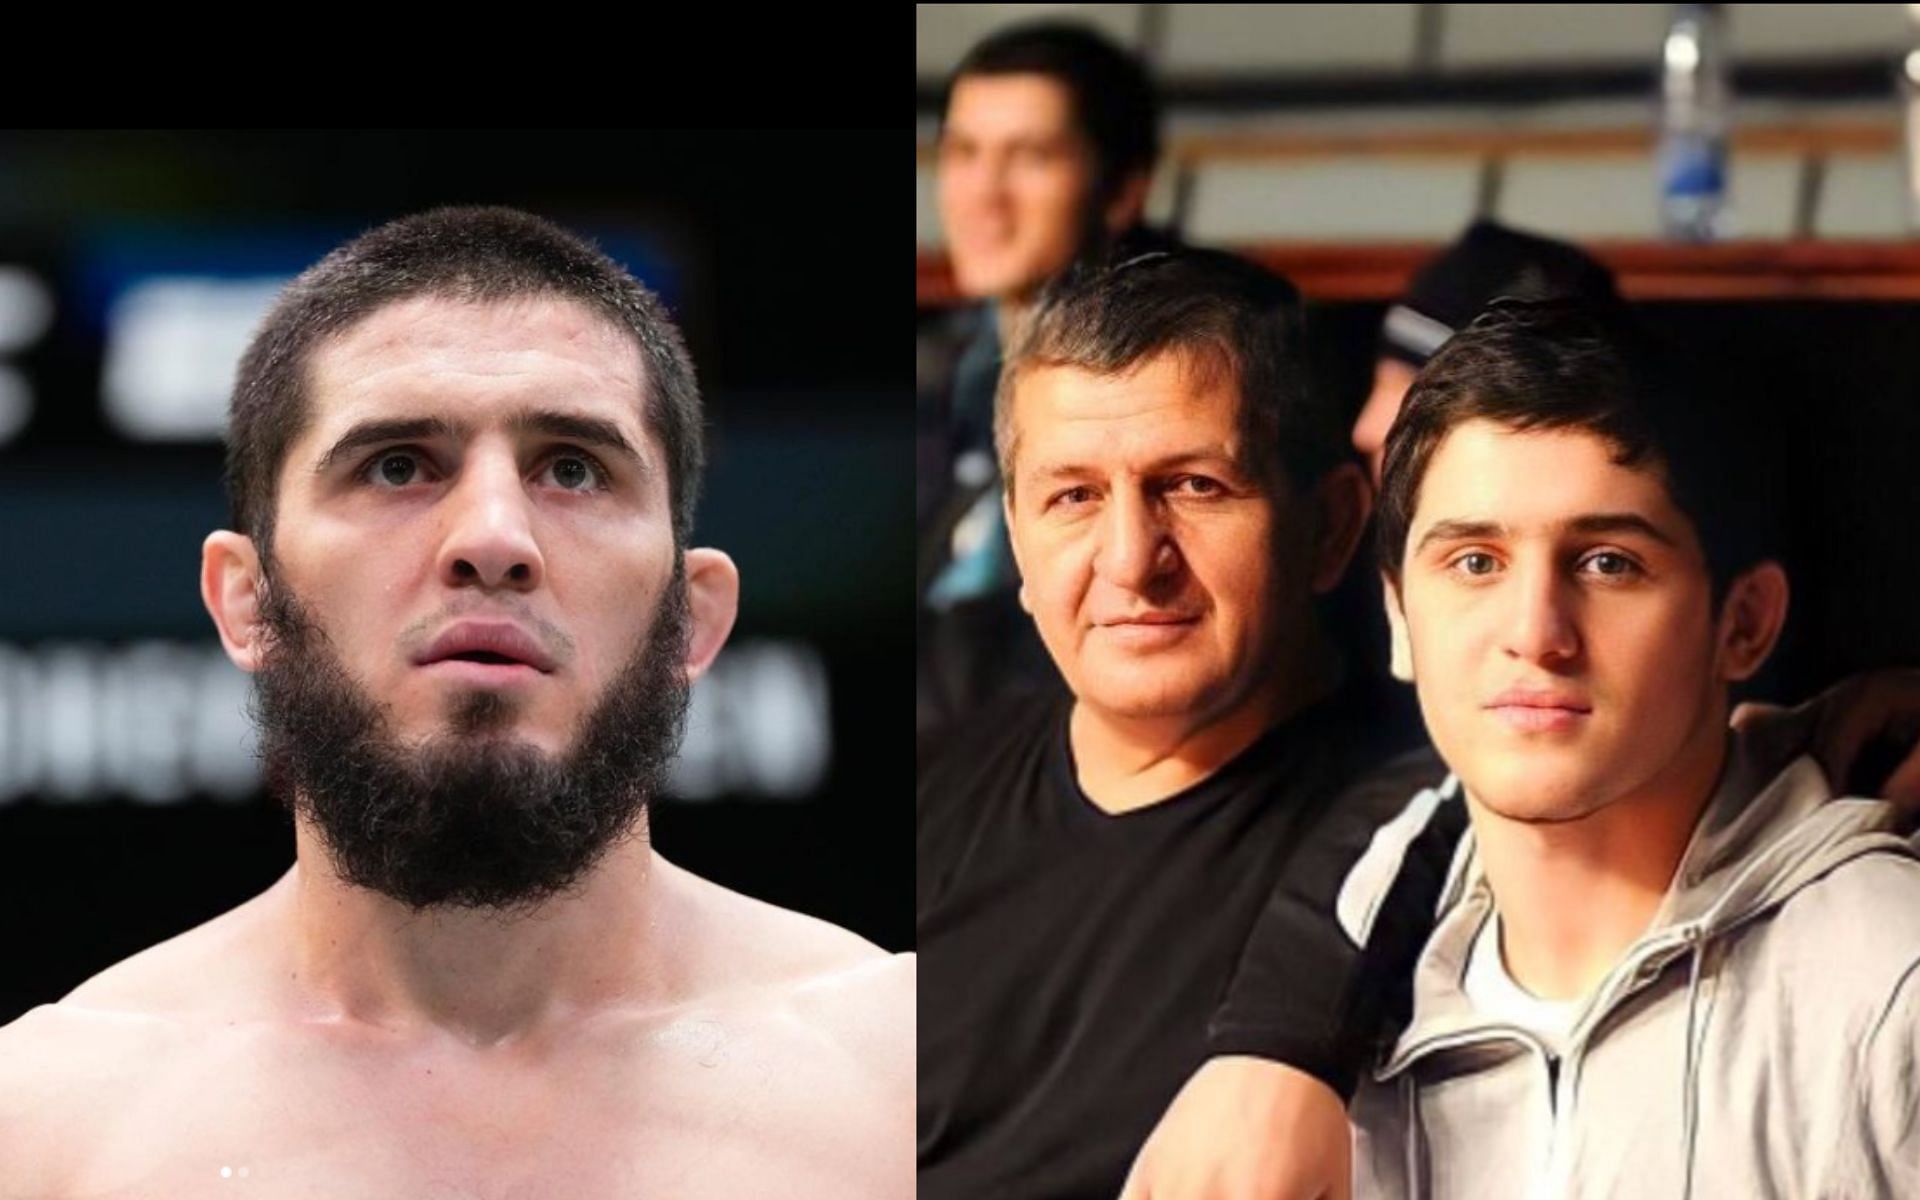 Islam Makhachev (left), Abdulmanap Nurmagomedov (right) [Images courtesy of @islam_makhachev on Instagram]